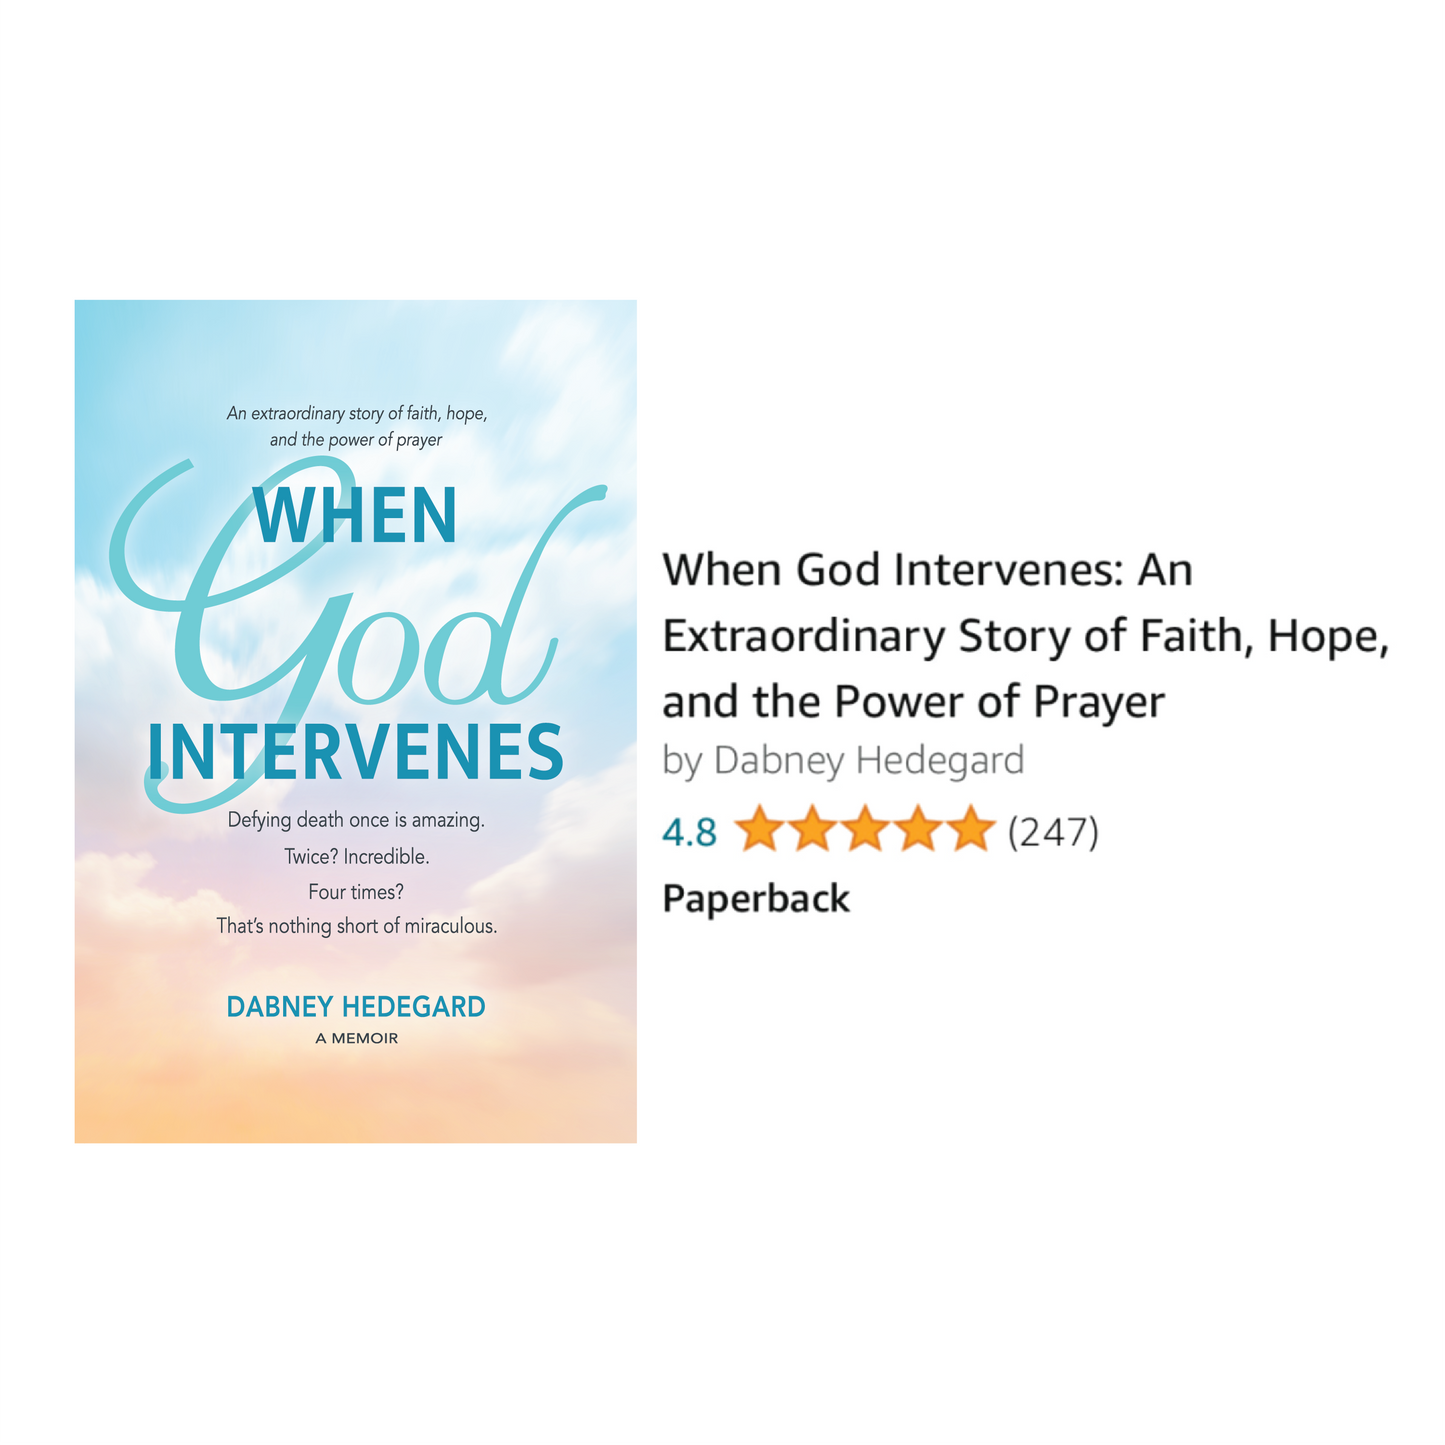 When God Intervenes: An extraordinary story of faith, hope, and the power of prayer